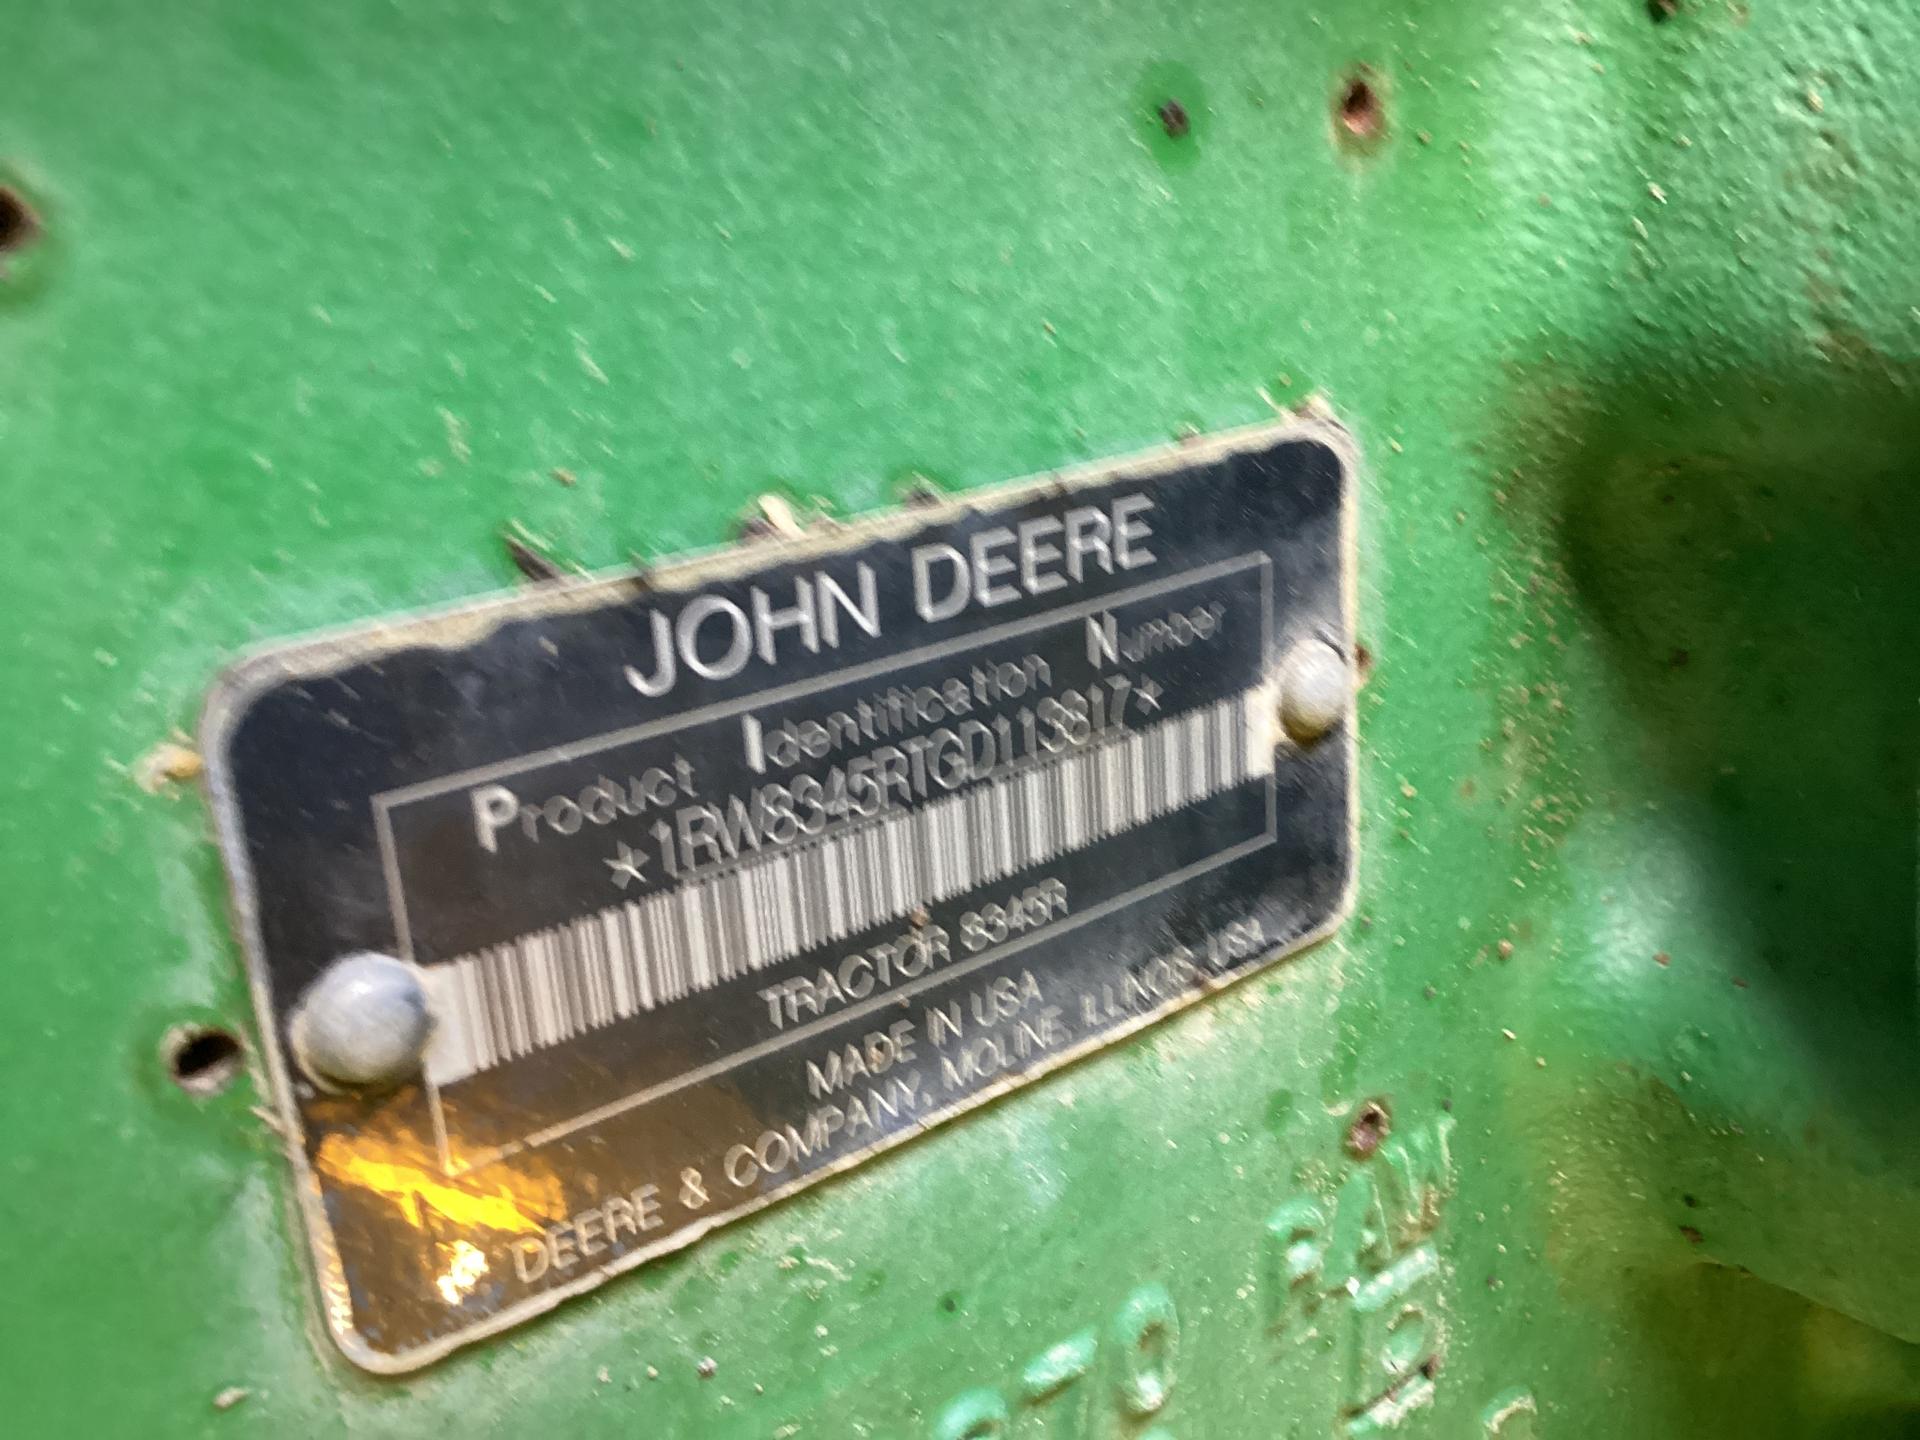 2016 John Deere 8345R